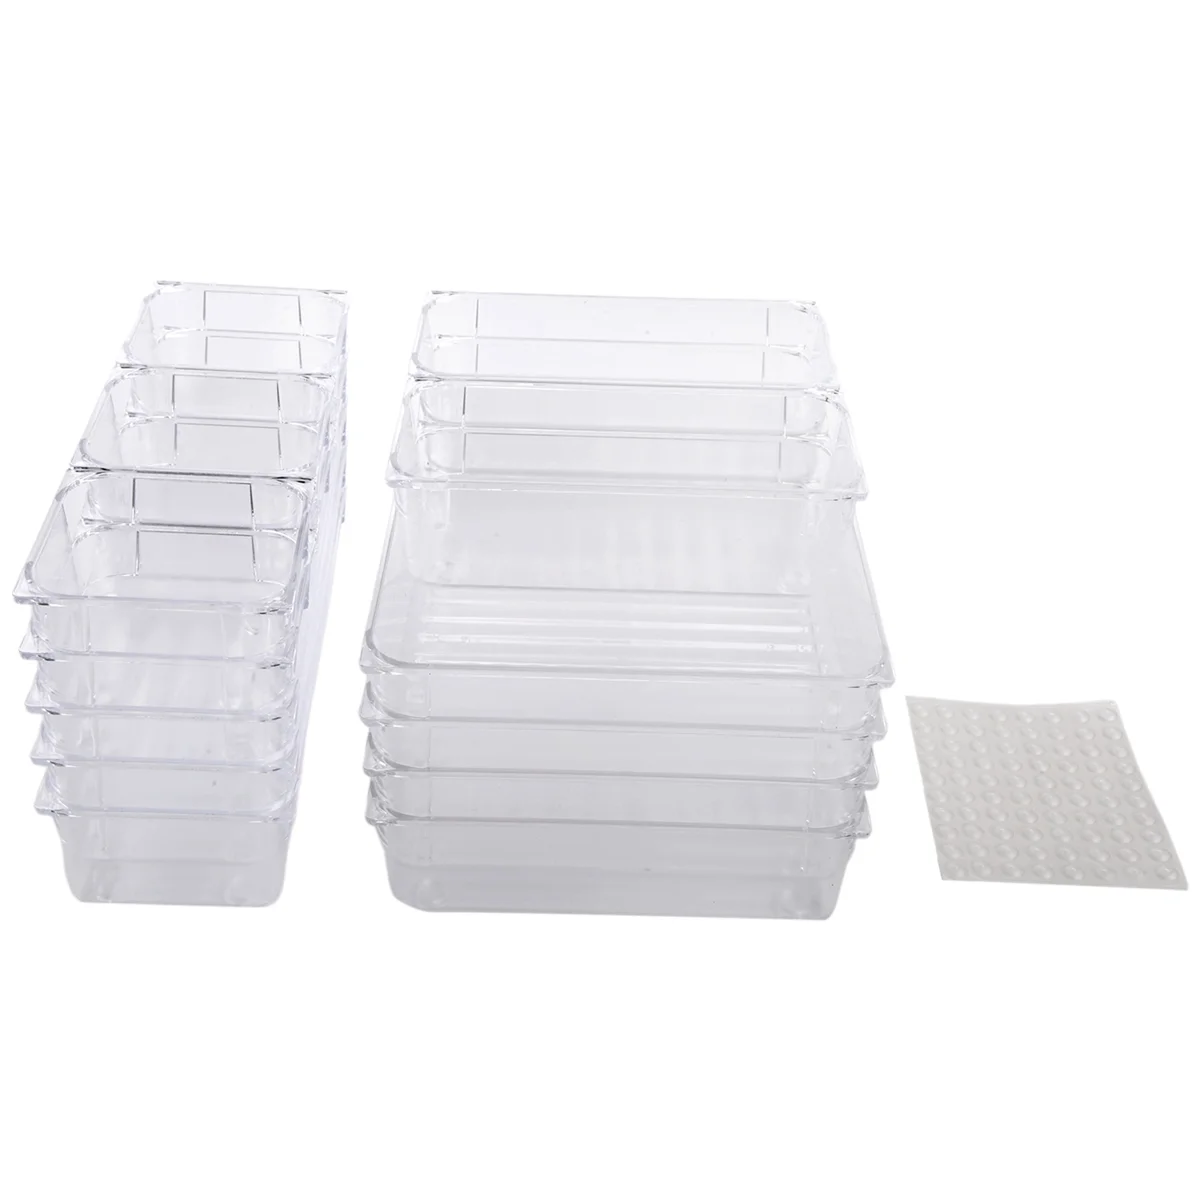 

18PCS Separate Drawers Organiser System, Non-Slip Drawer Organiser, Transparent Drawer Insert Storage Box